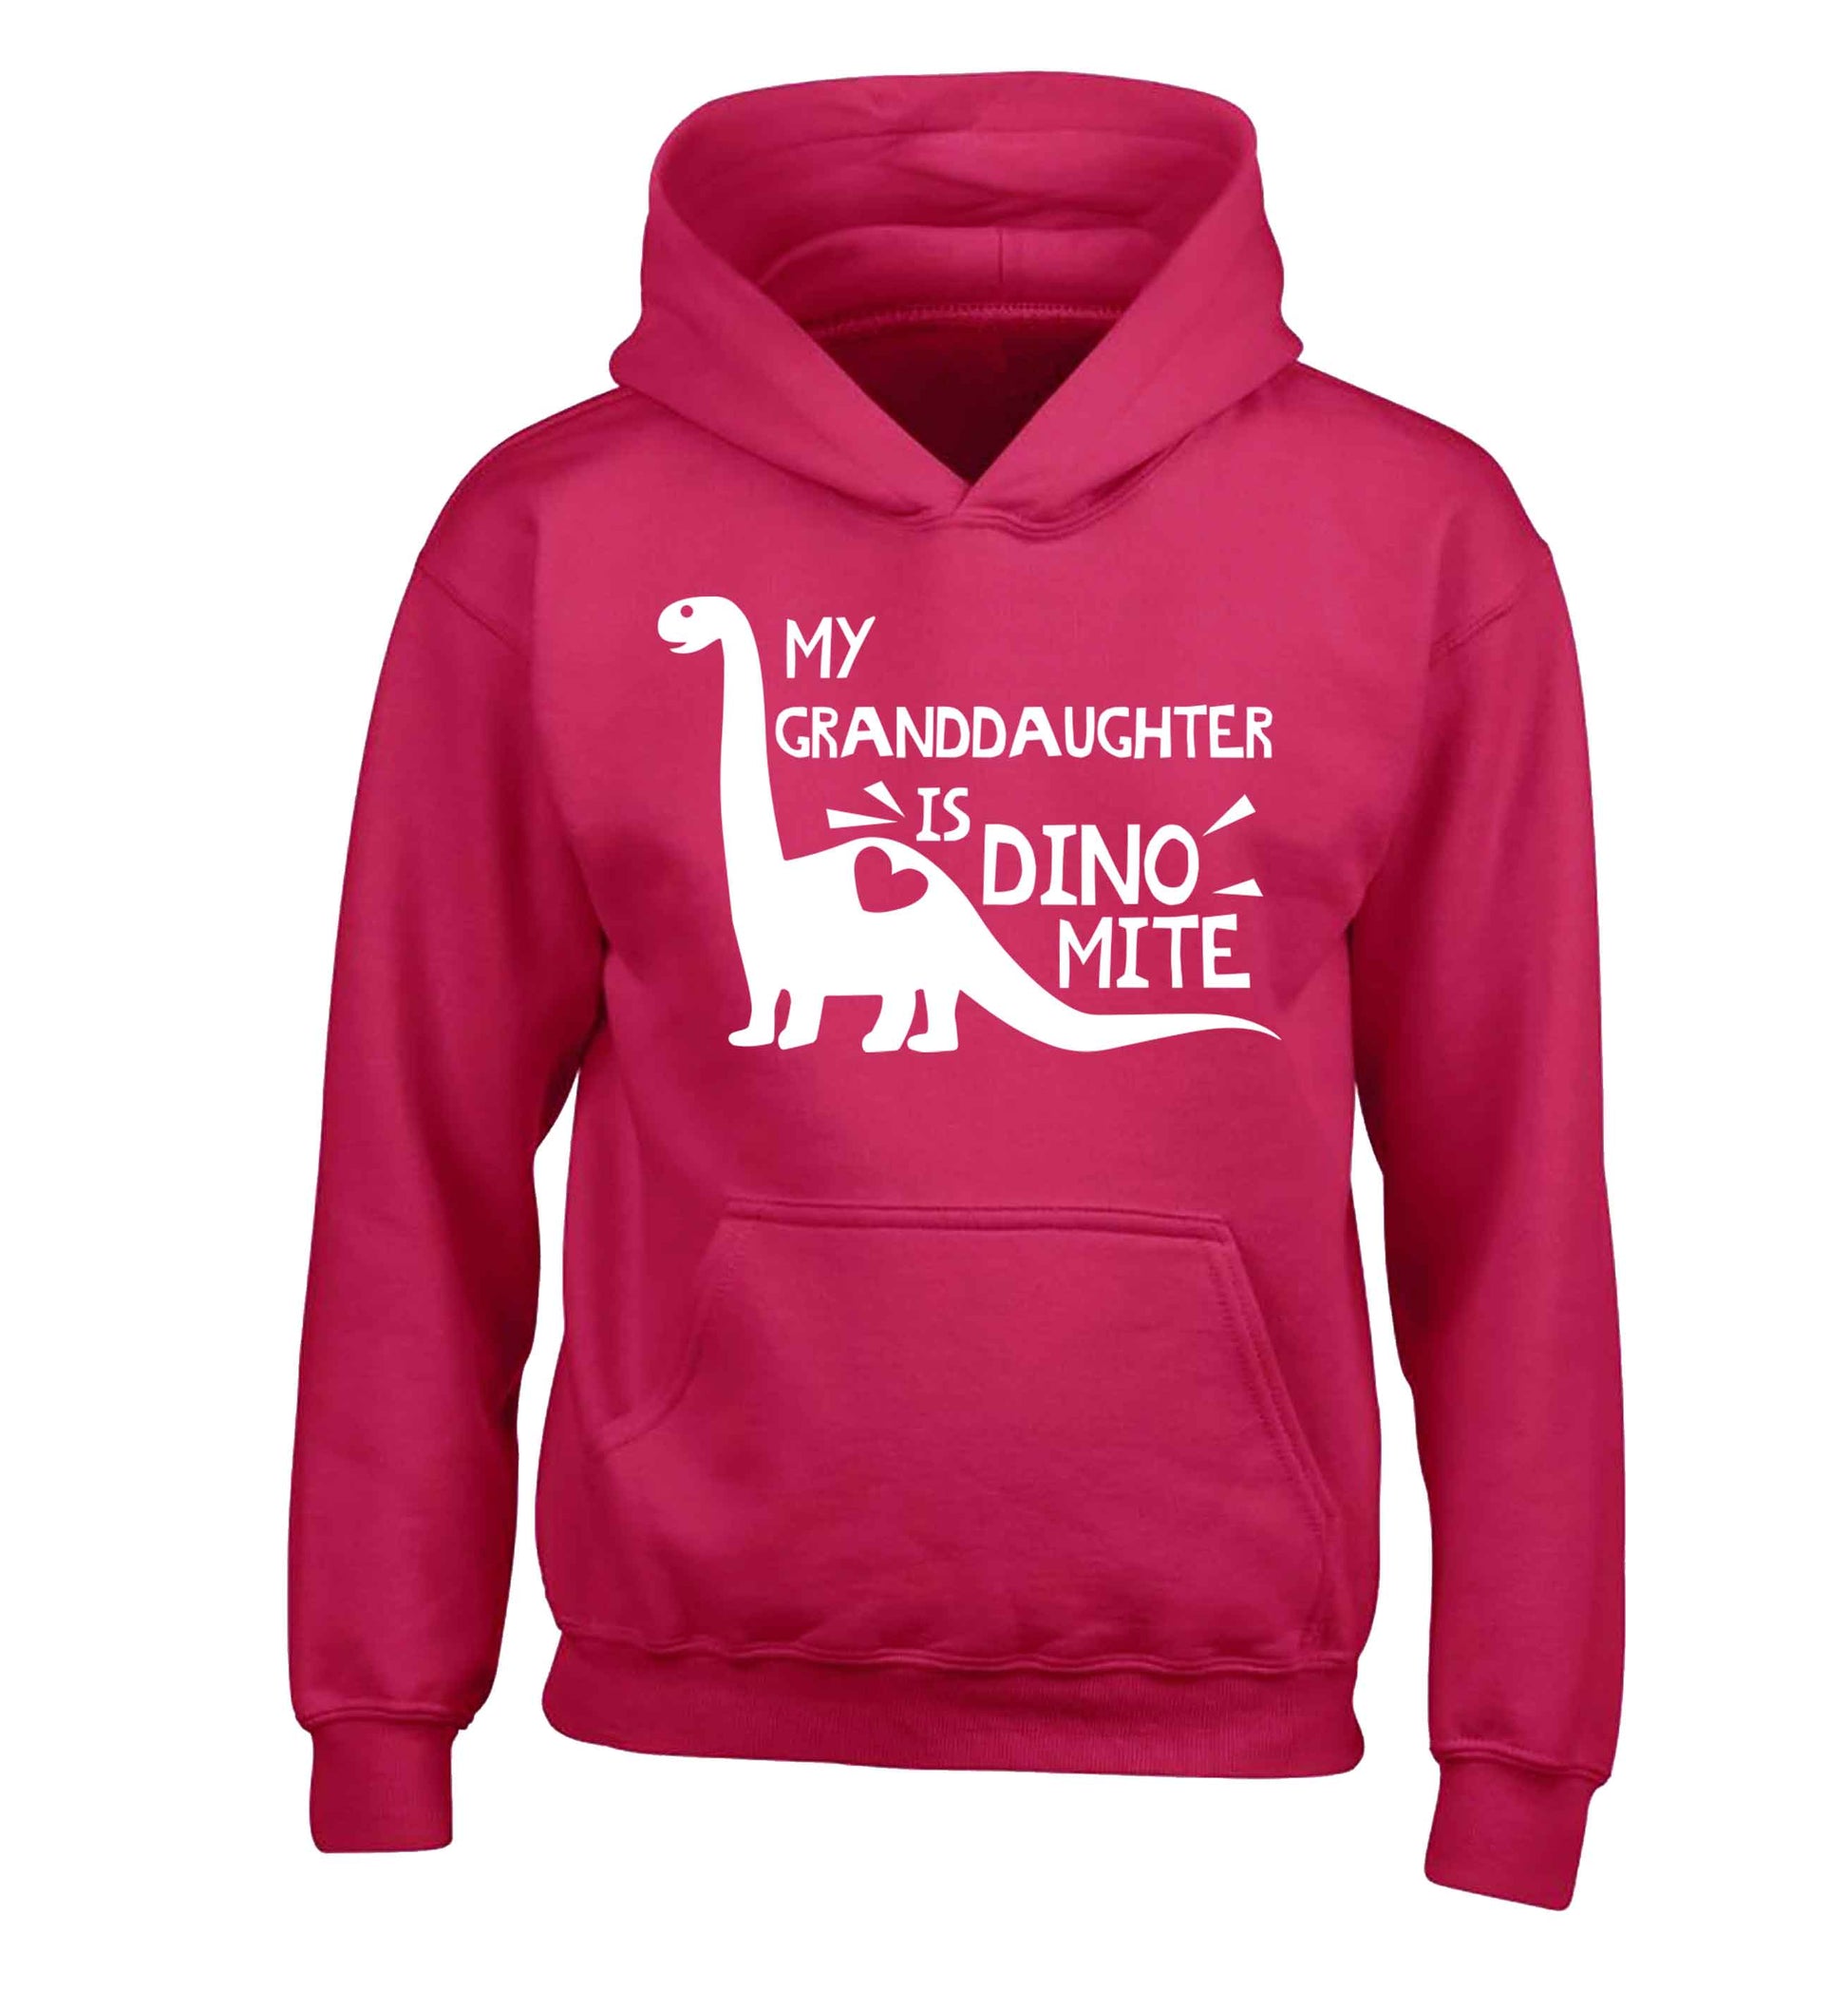 My granddaughter is dinomite! children's pink hoodie 12-13 Years